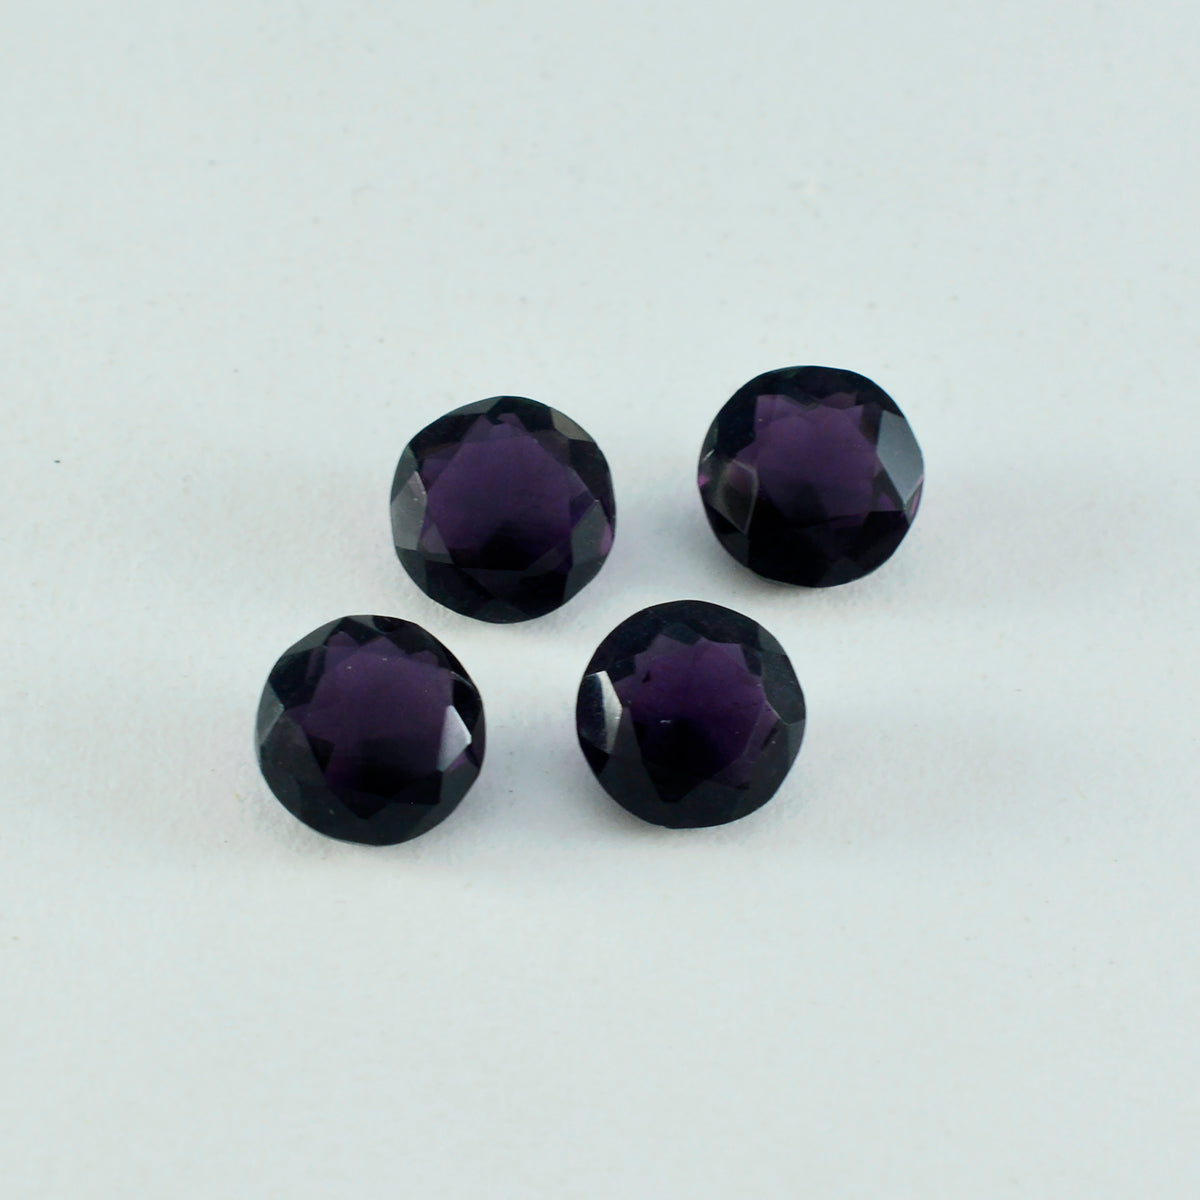 Riyogems 1PC Purple Amethyst CZ Faceted 10x10 mm Round Shape excellent Quality Gem